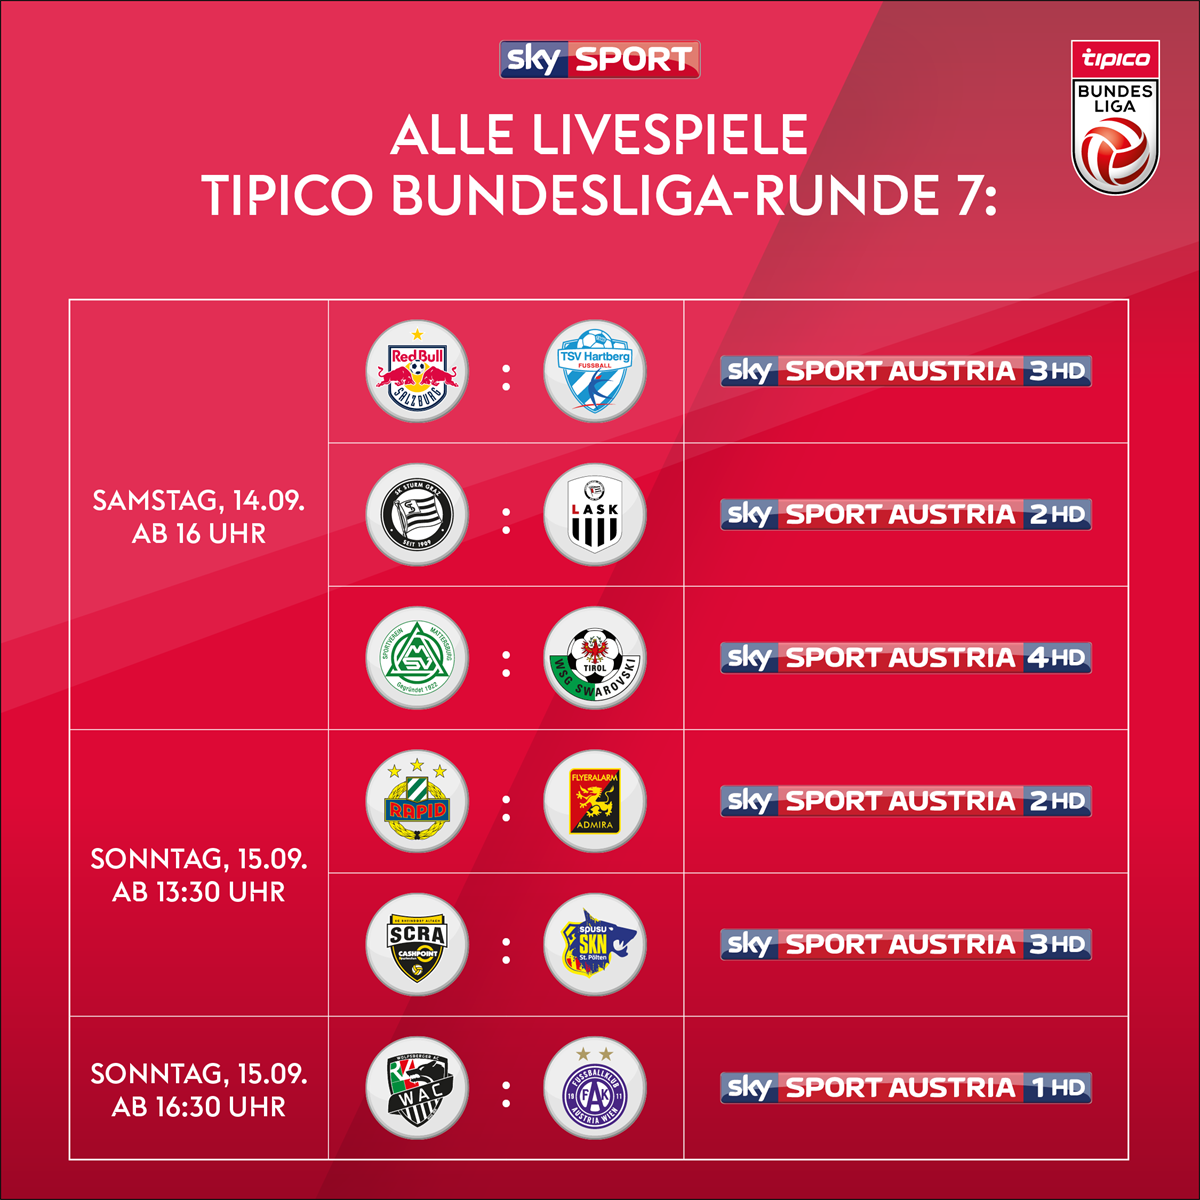 Tipico Bundesliga-Runde 7